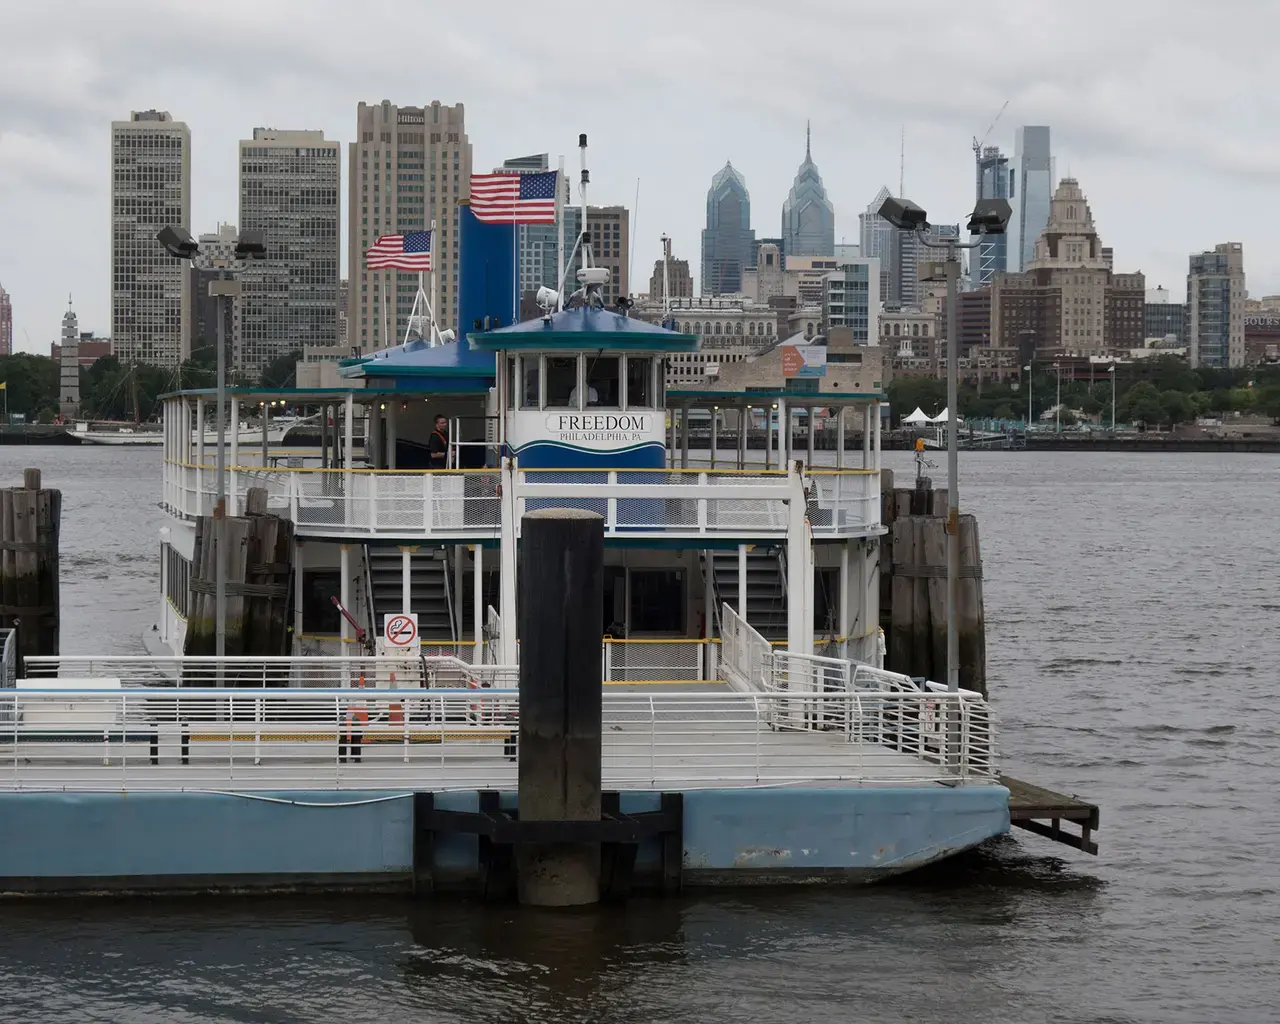 "Whitman at 200: Art and Democracy," East Camden ferry dock and Philadelphia skyline, 2017, digital photograph. Photo by John J.H. Phillips.